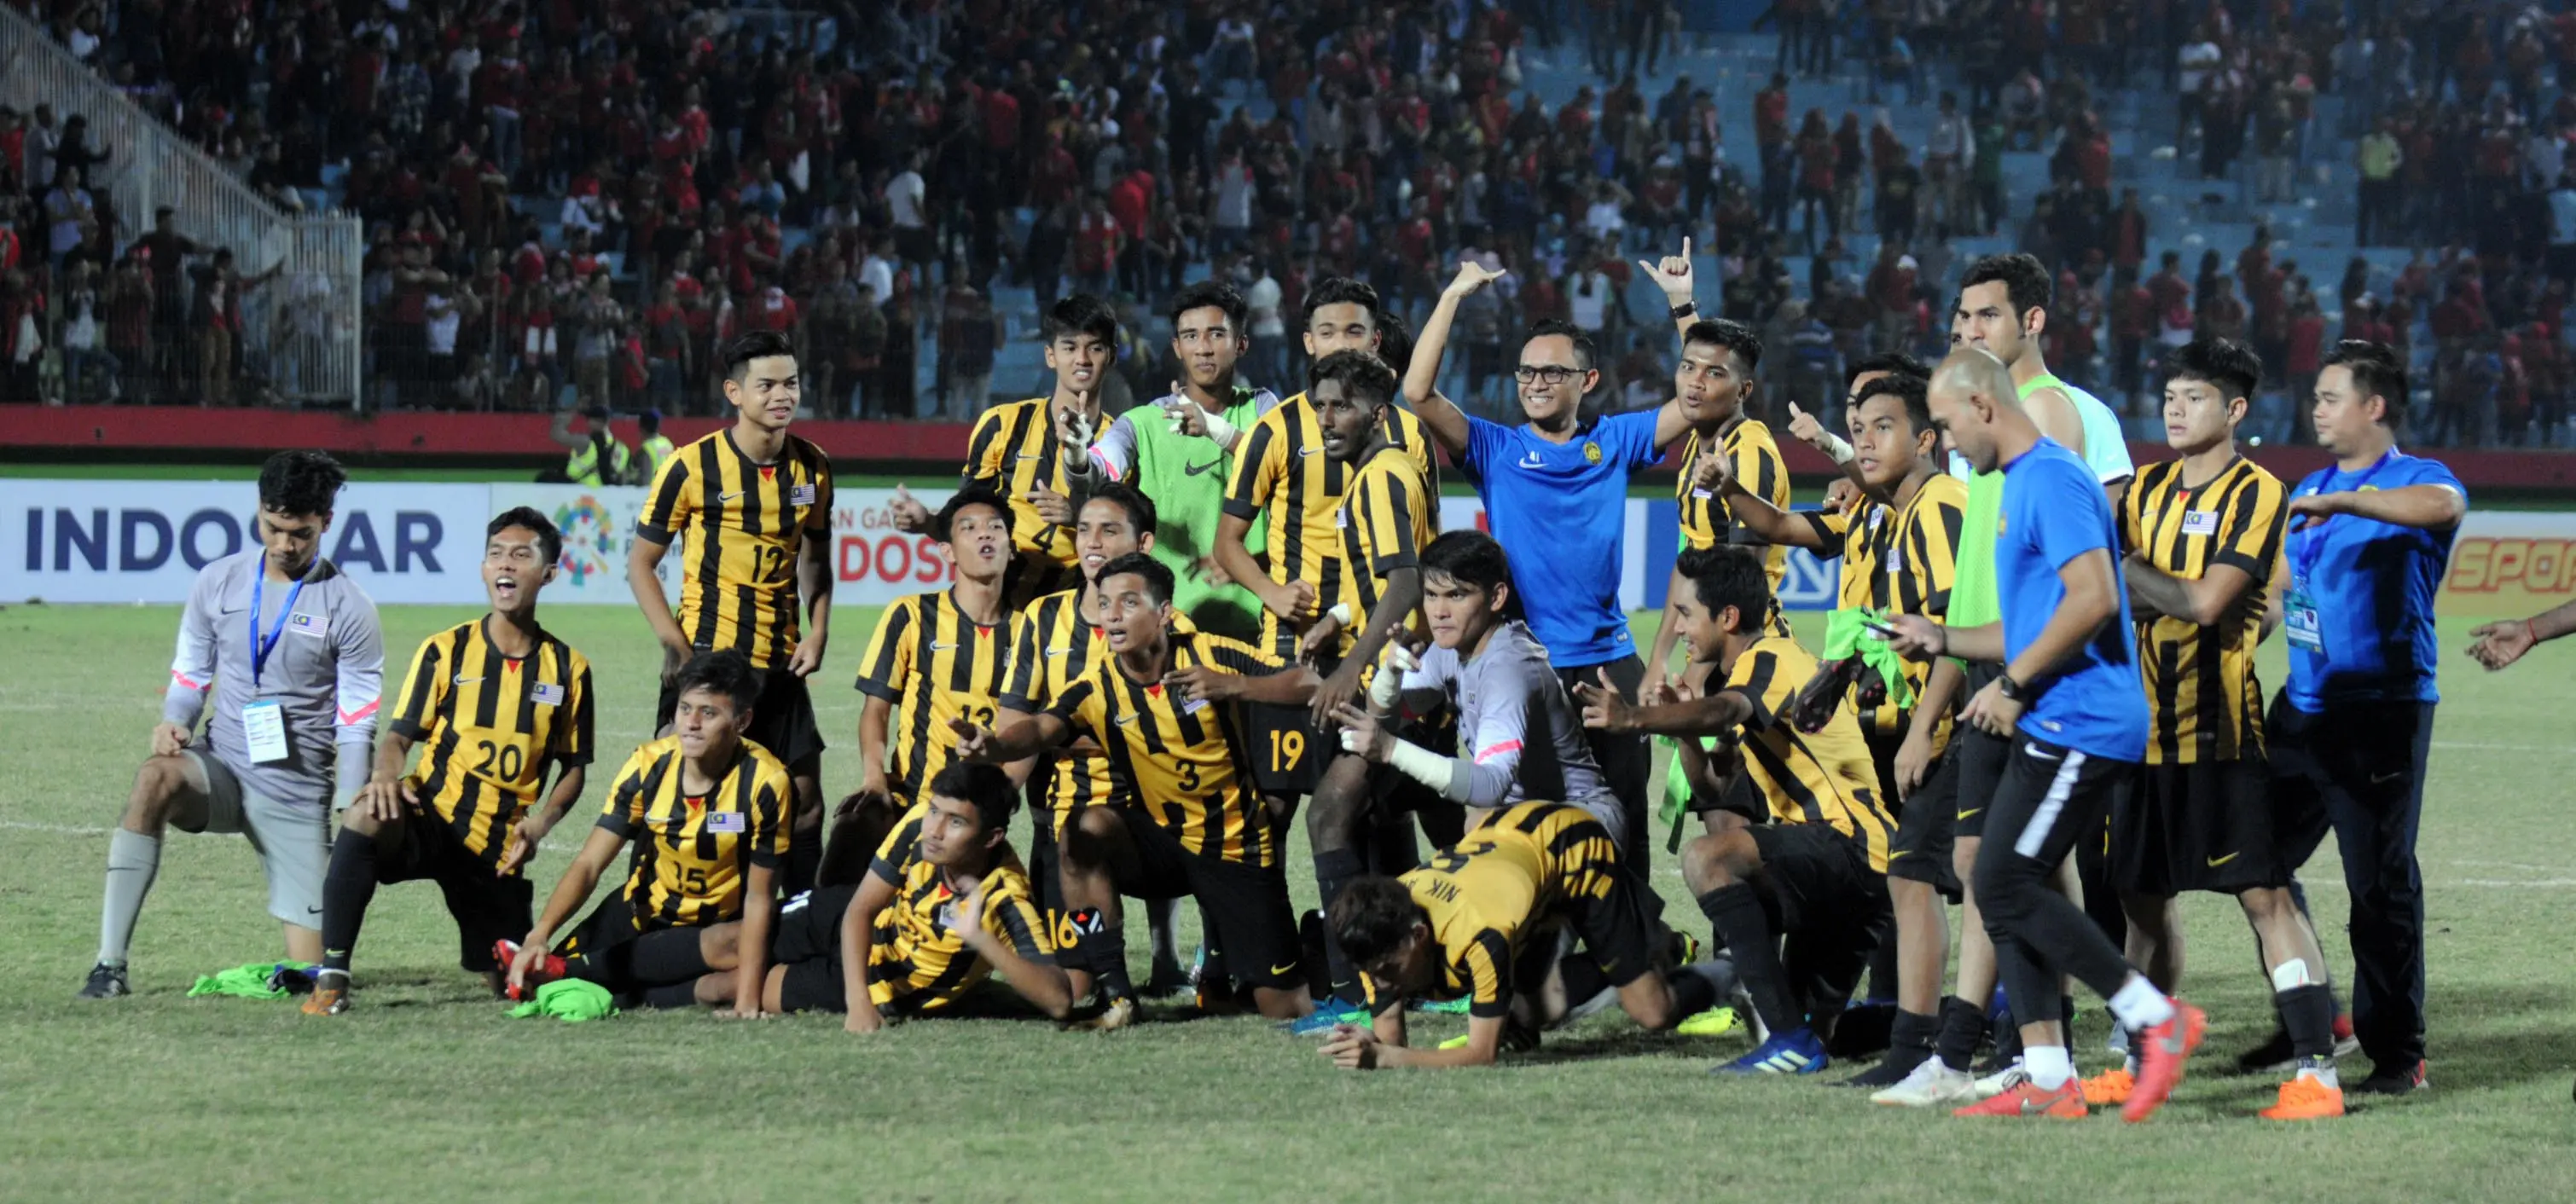 Timnas Malaysia U-19 melangkah ke final Piala AFF U-19 2018 setelah mengalahkan Indonesia 4-3 (1-1), Kamis (12/7/2018). (Bola.com/Zaidan Nazarul)